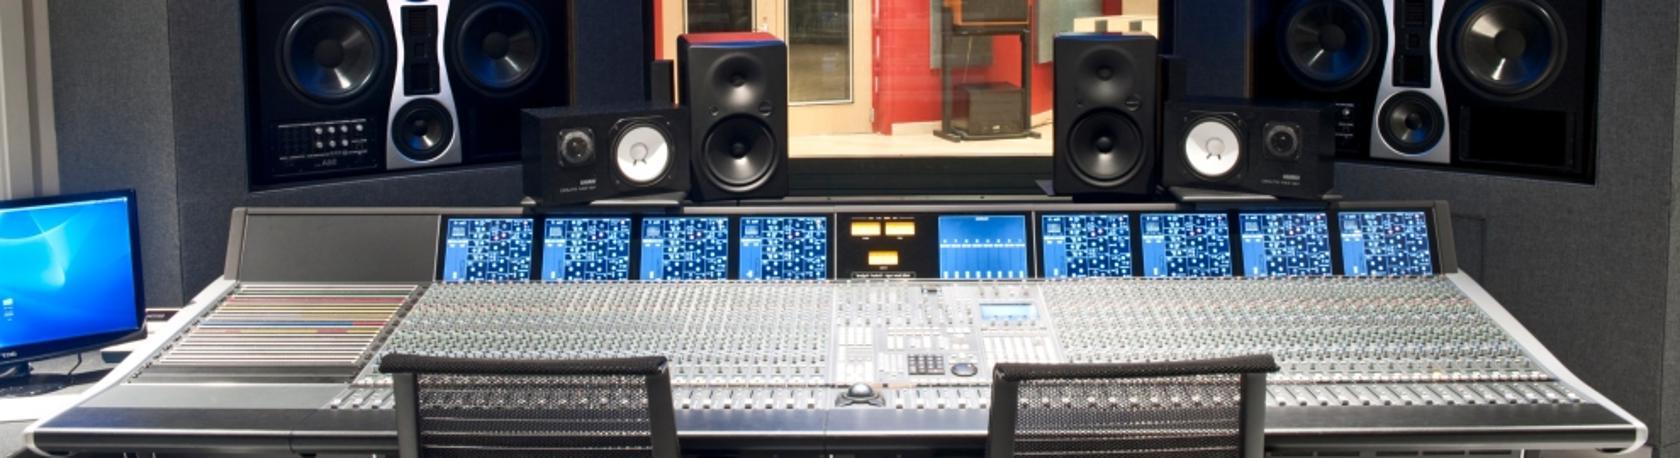 Recording Arts Technology at Tri-C